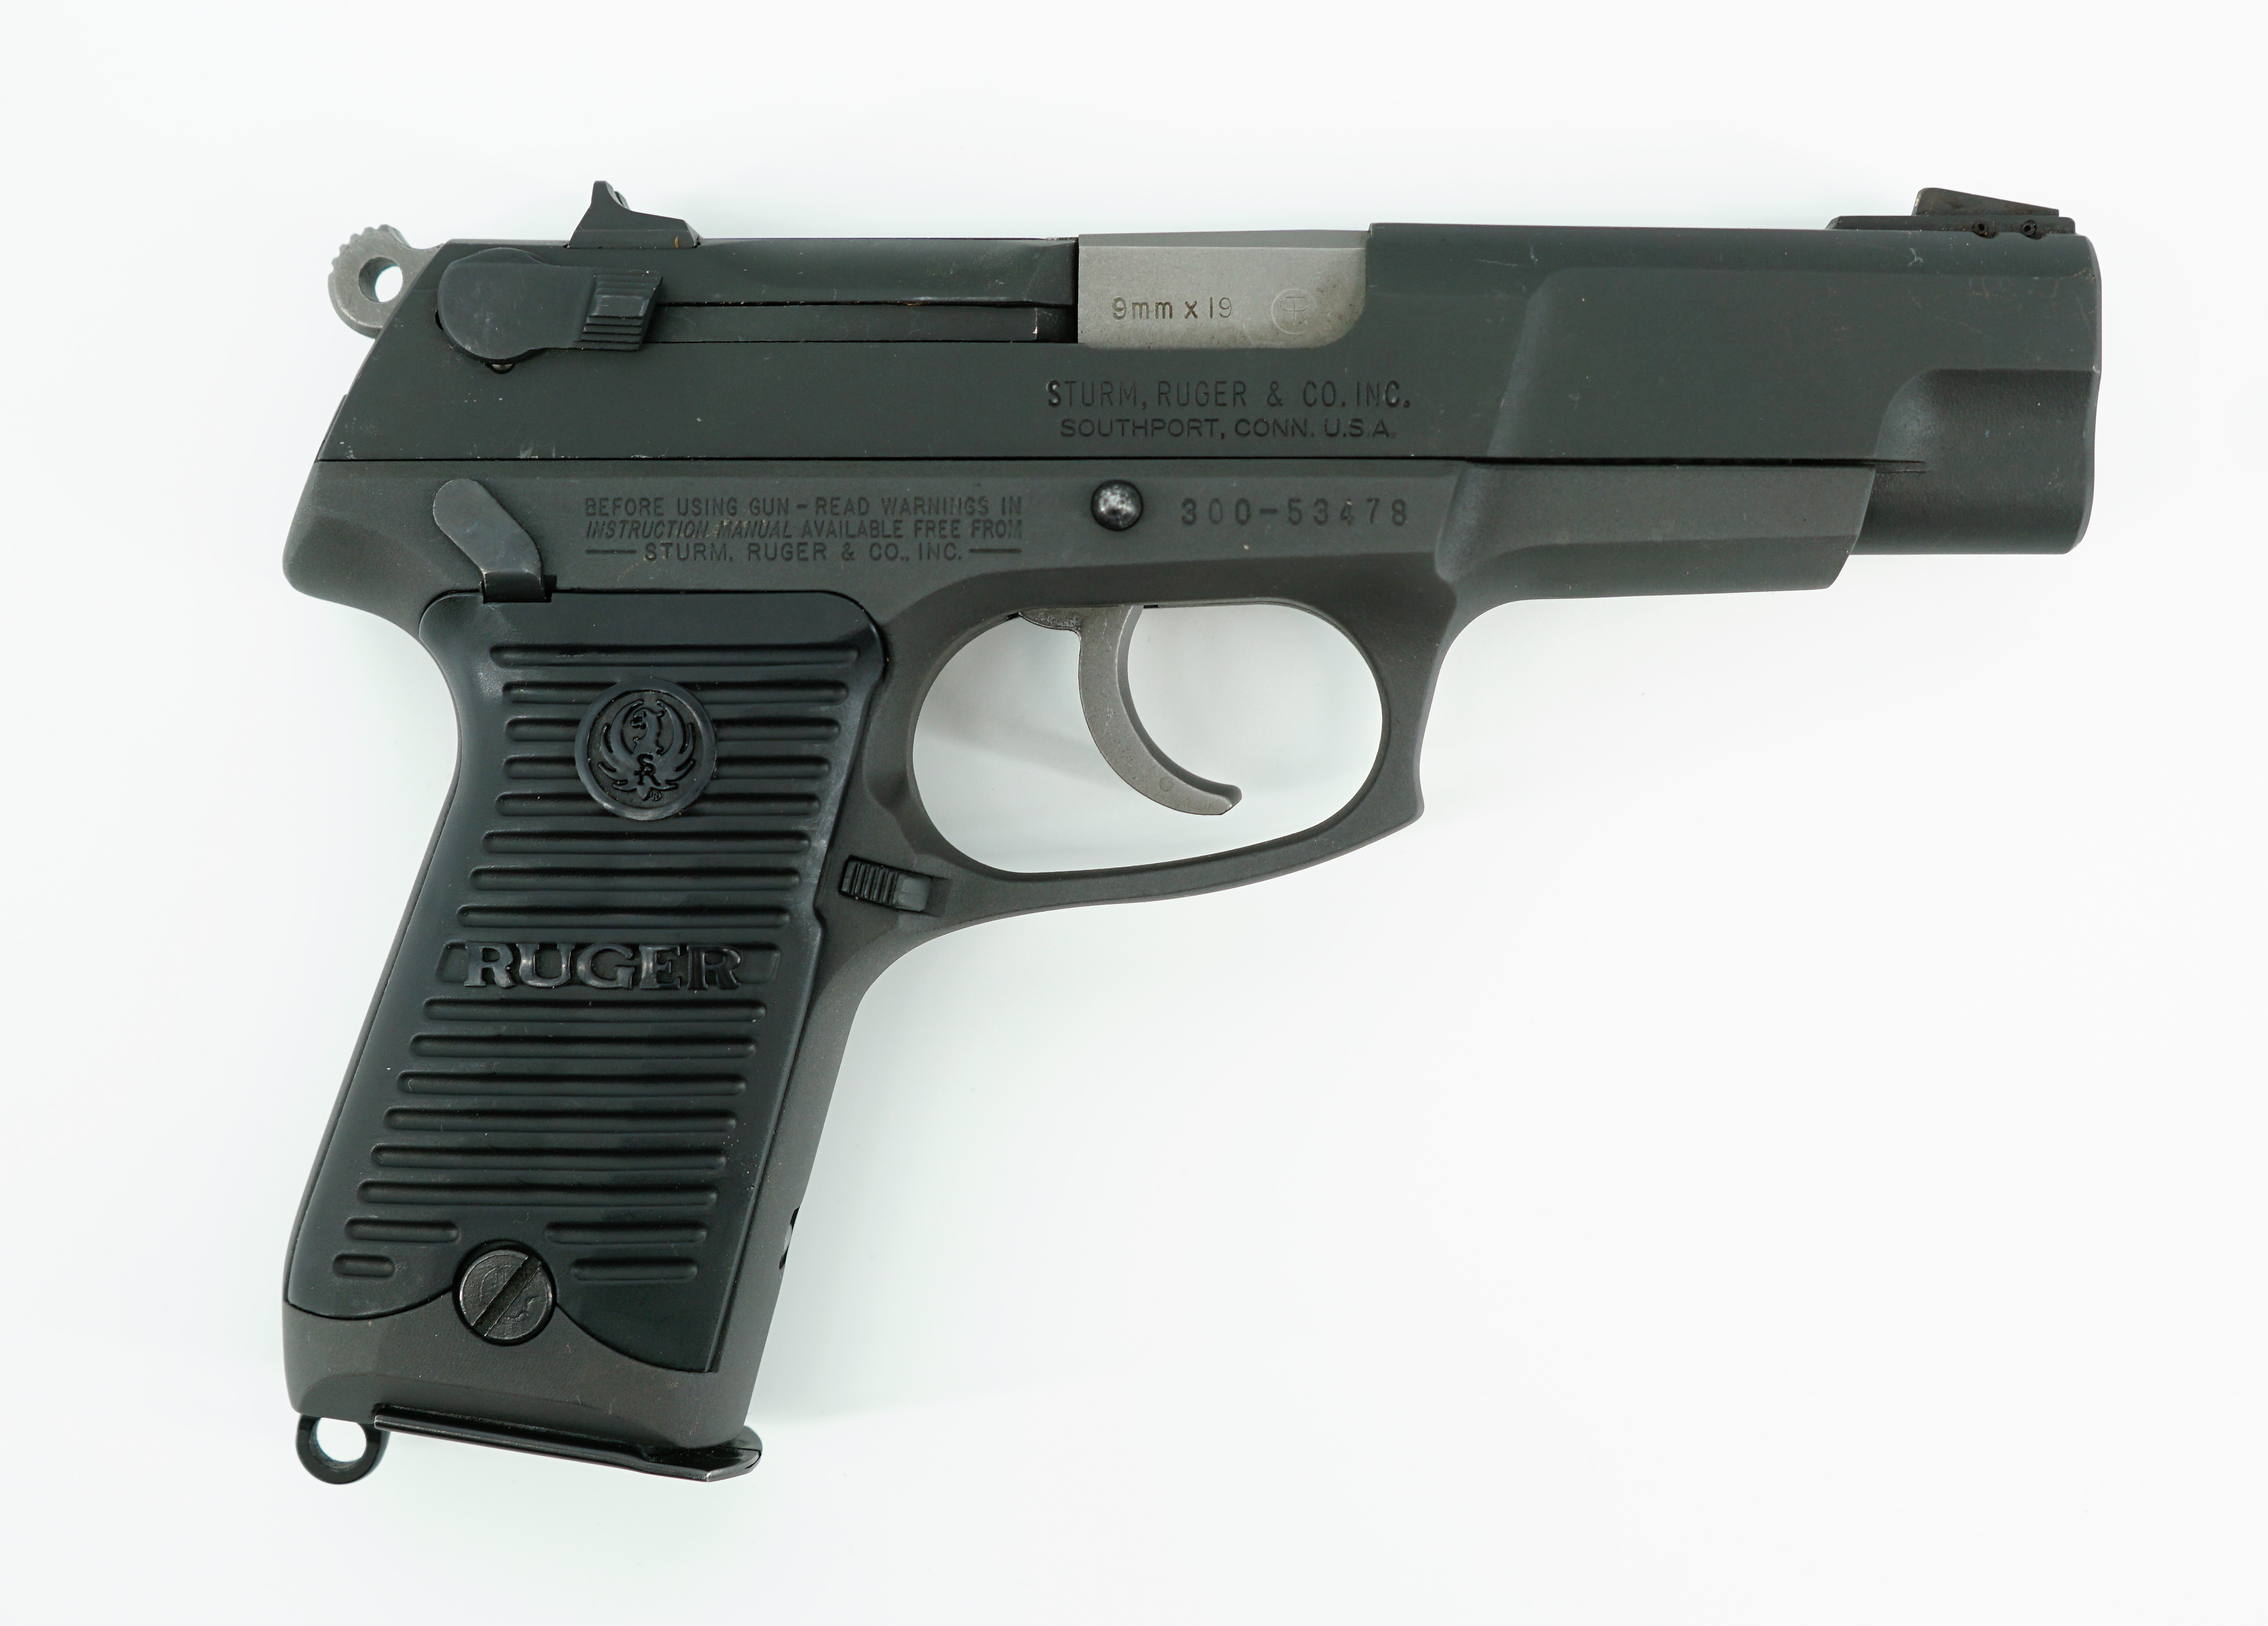 Ruger P-85 9mm pistooli käytetty MT 